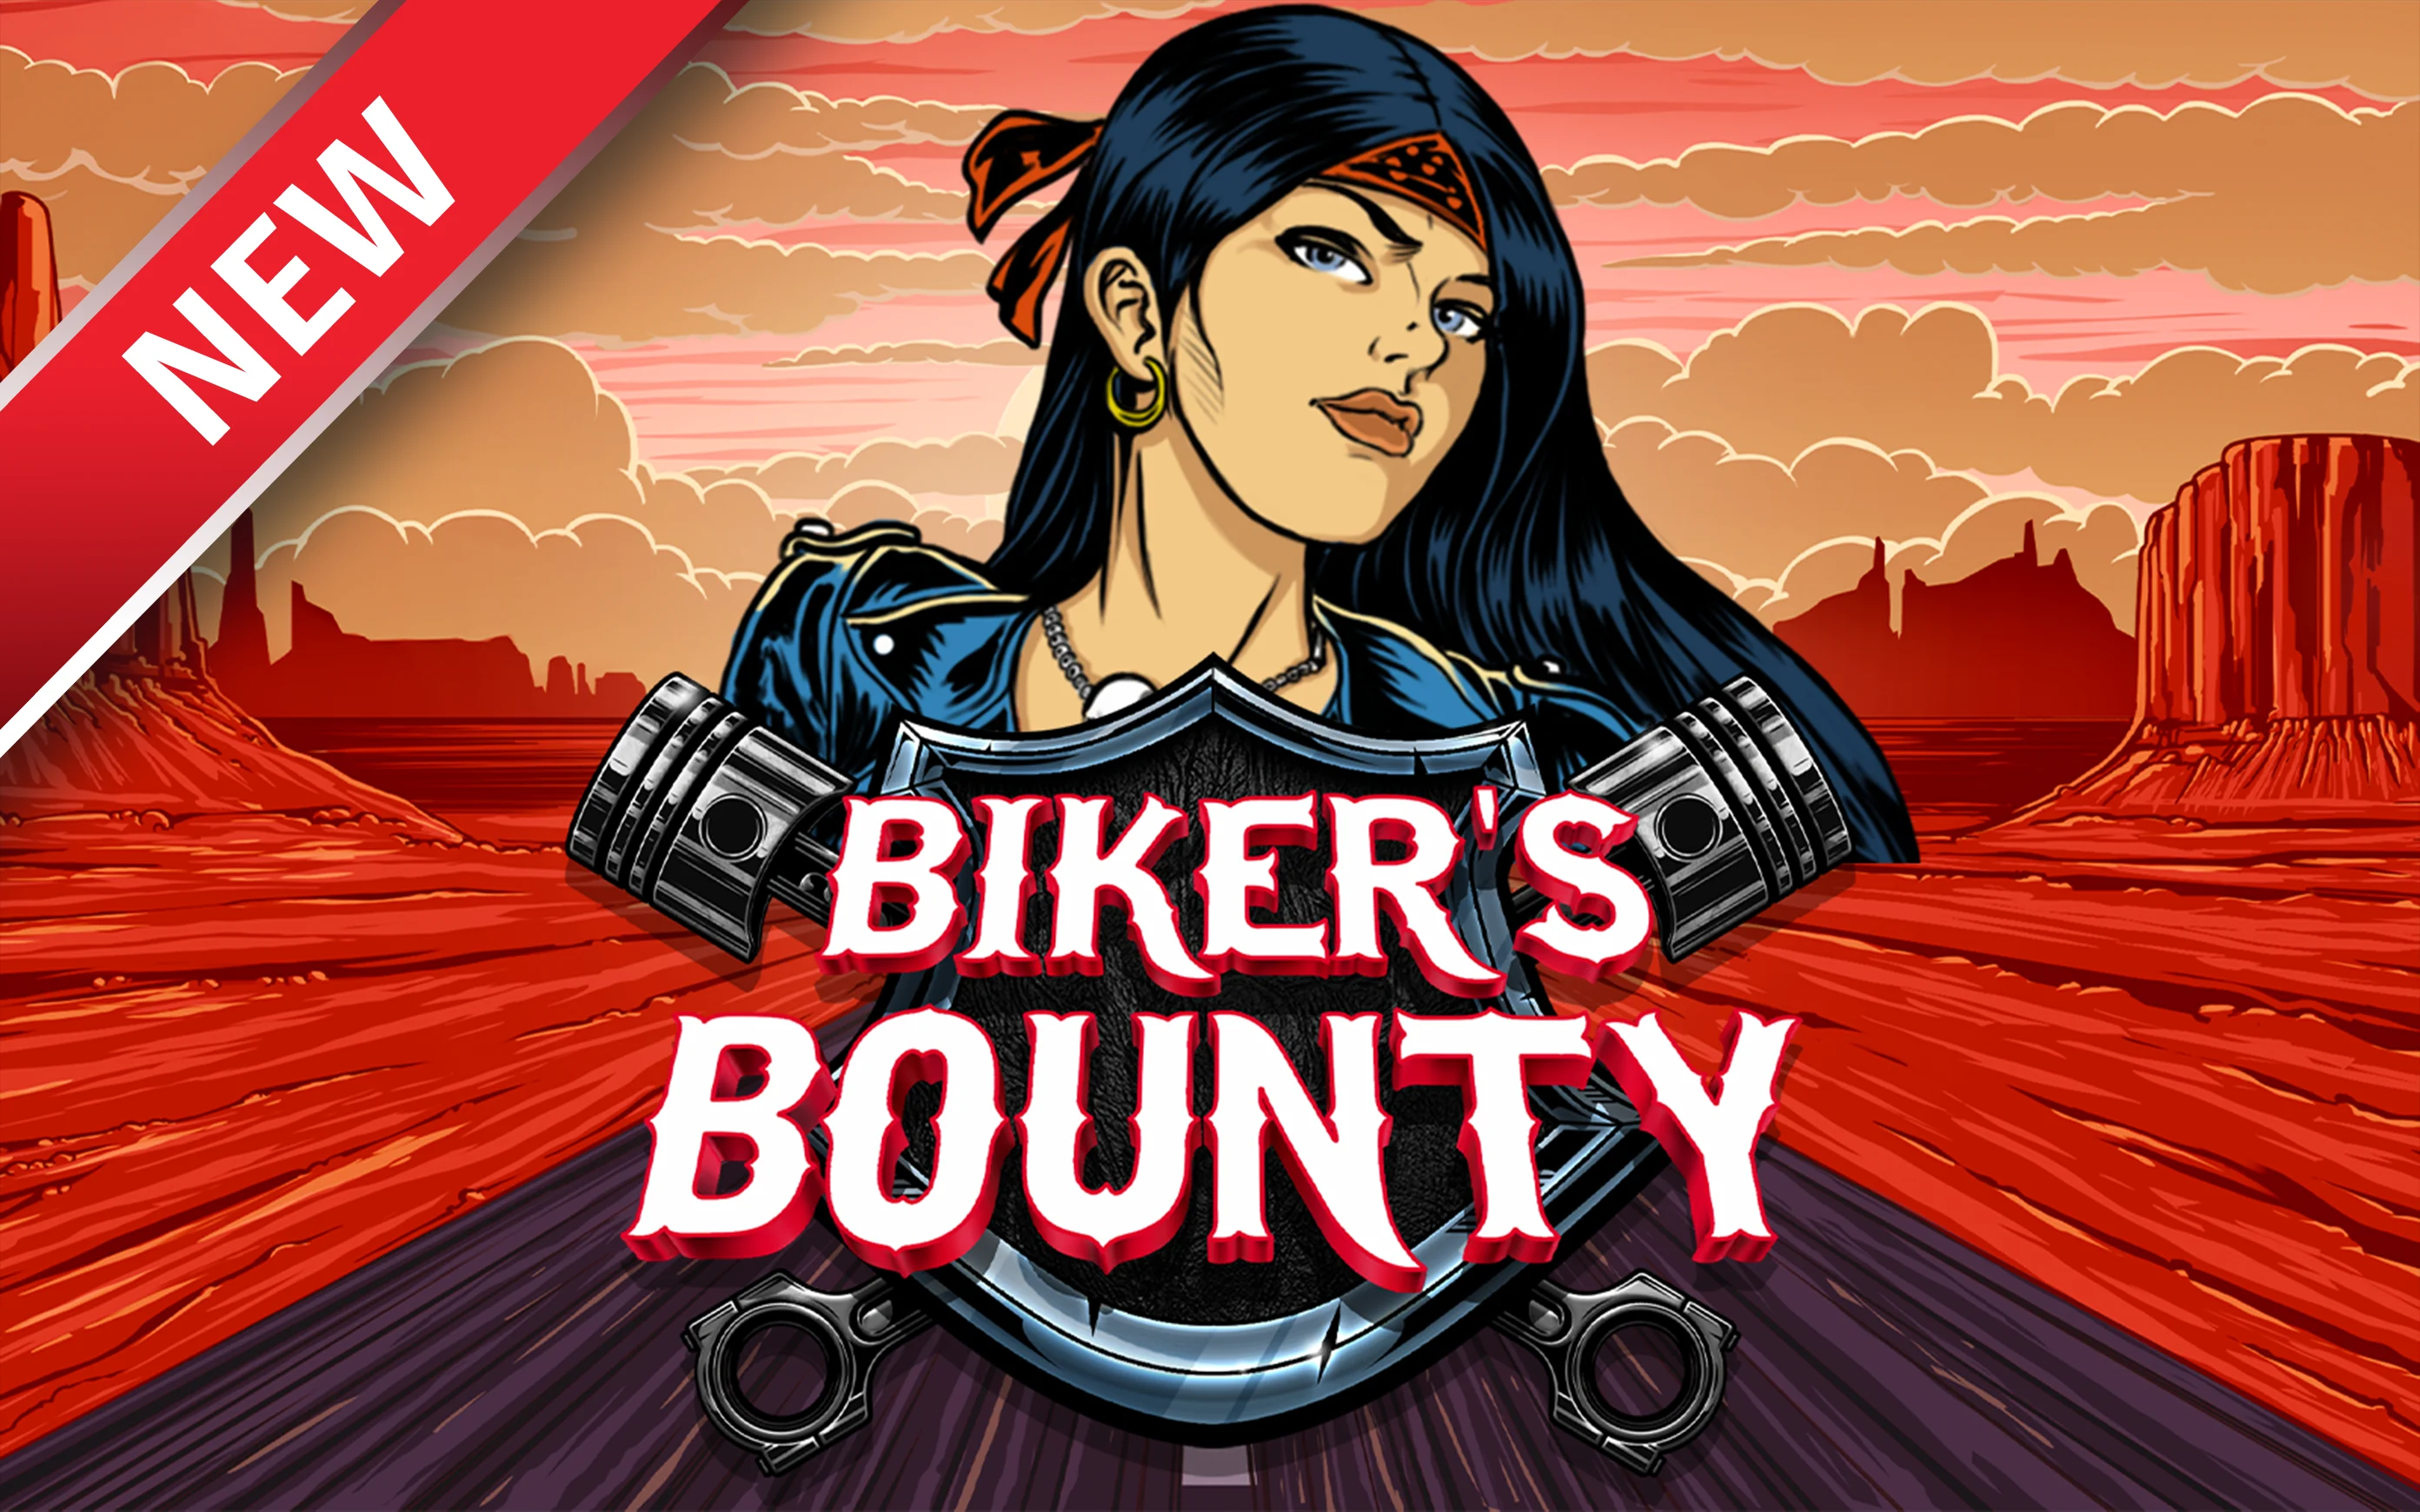 Joacă Biker's Bounty în cazinoul online Starcasino.be